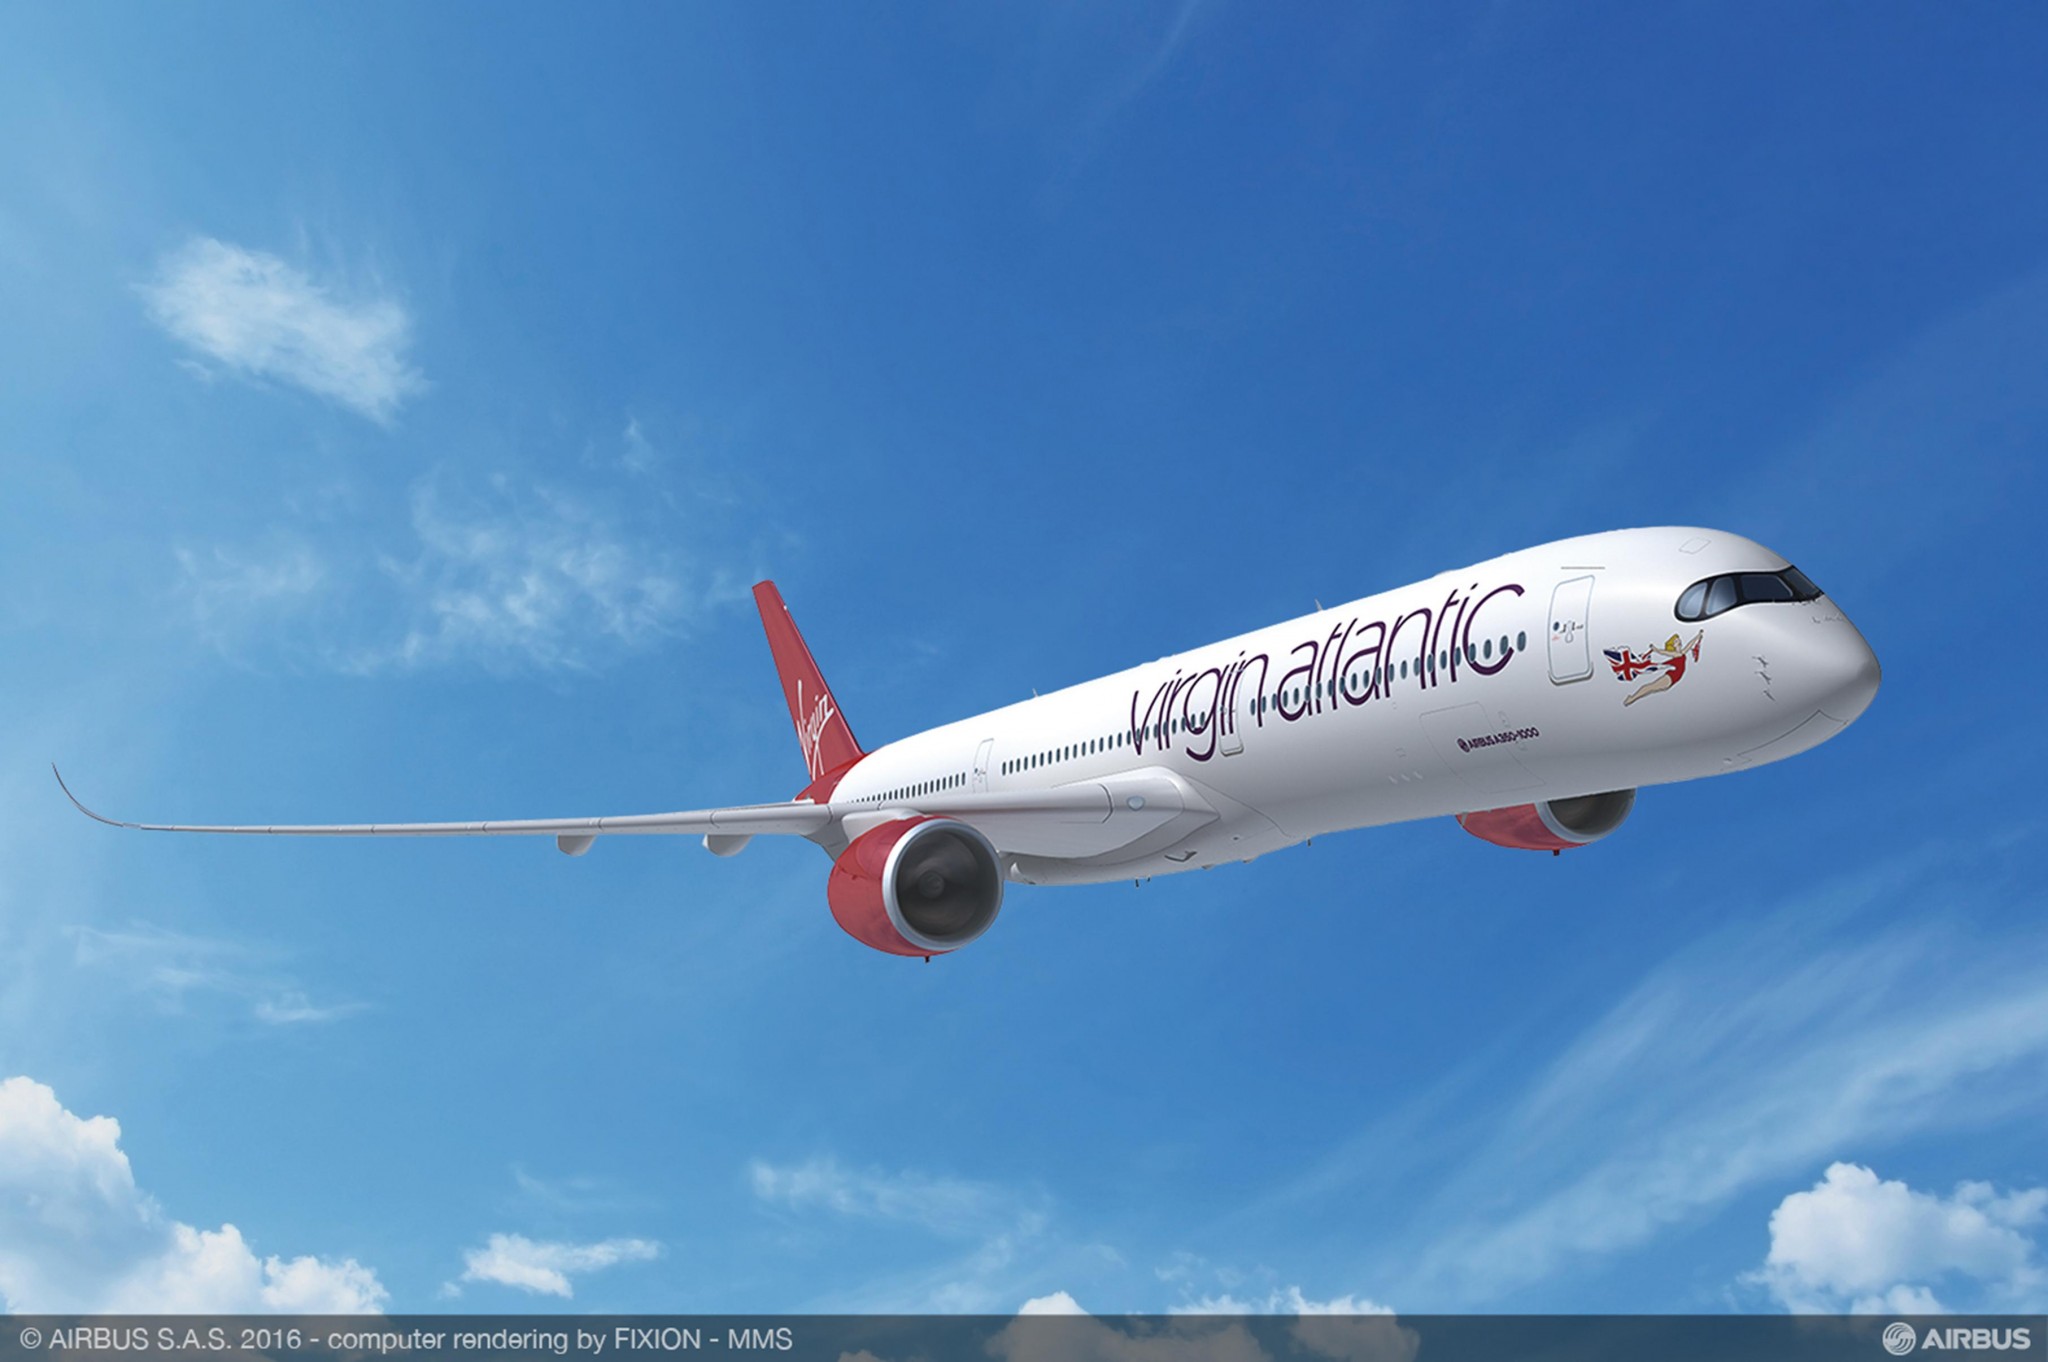 Virgin Atlantic to offer TSAprecheck